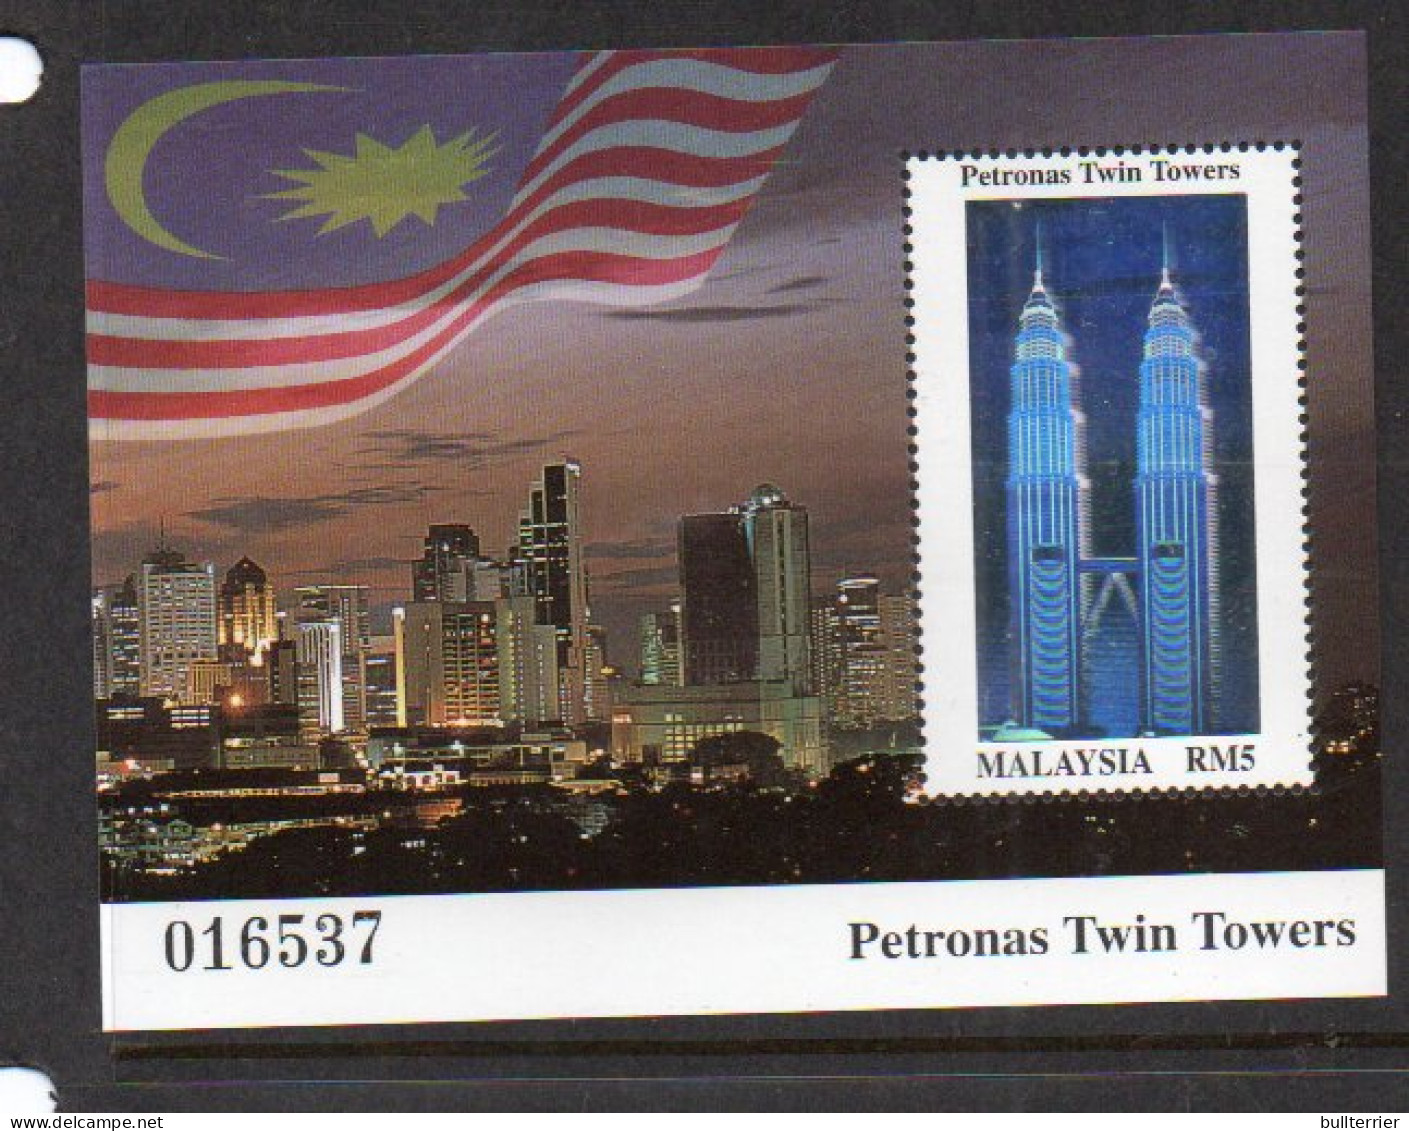 HOLOGRAMS - MALAYSIA - 1999 - PETRONAS TOWER  HOLOGRAM  SOUVENIR SHEET  MINT NEVER HINGED  - Ologrammi